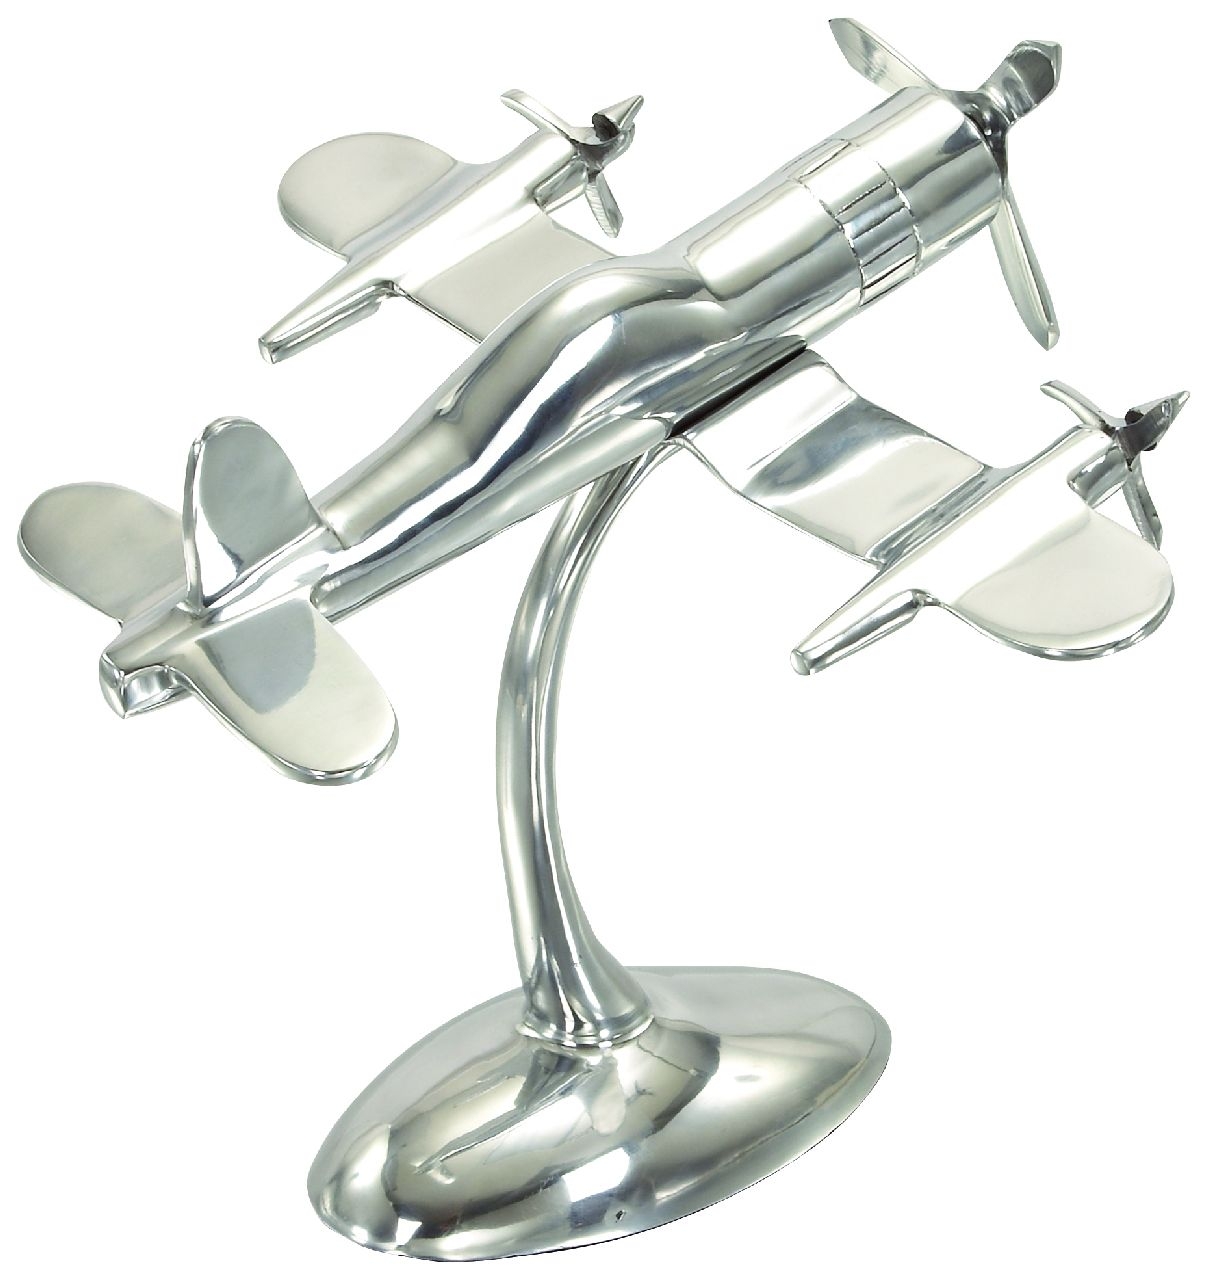 Flight of Fancy Silver Plane Sculpture - Image 0